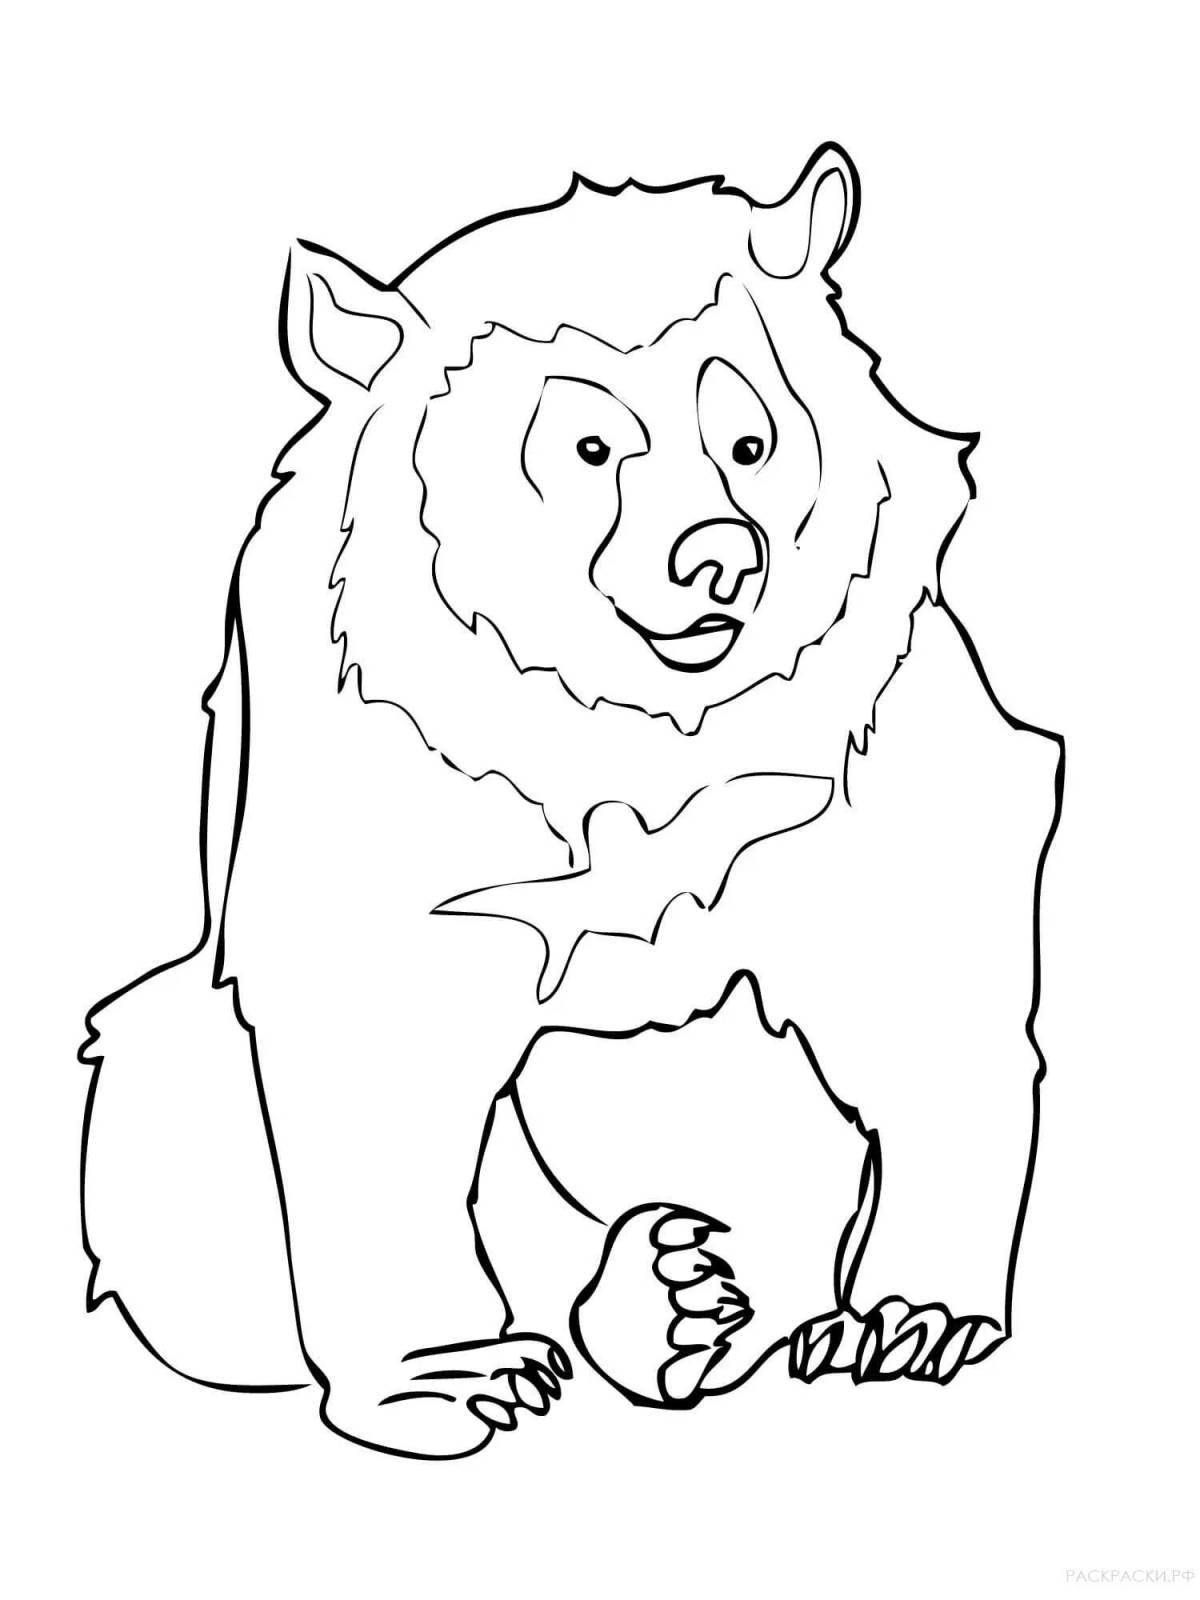 Rampant Himalayan bear coloring page